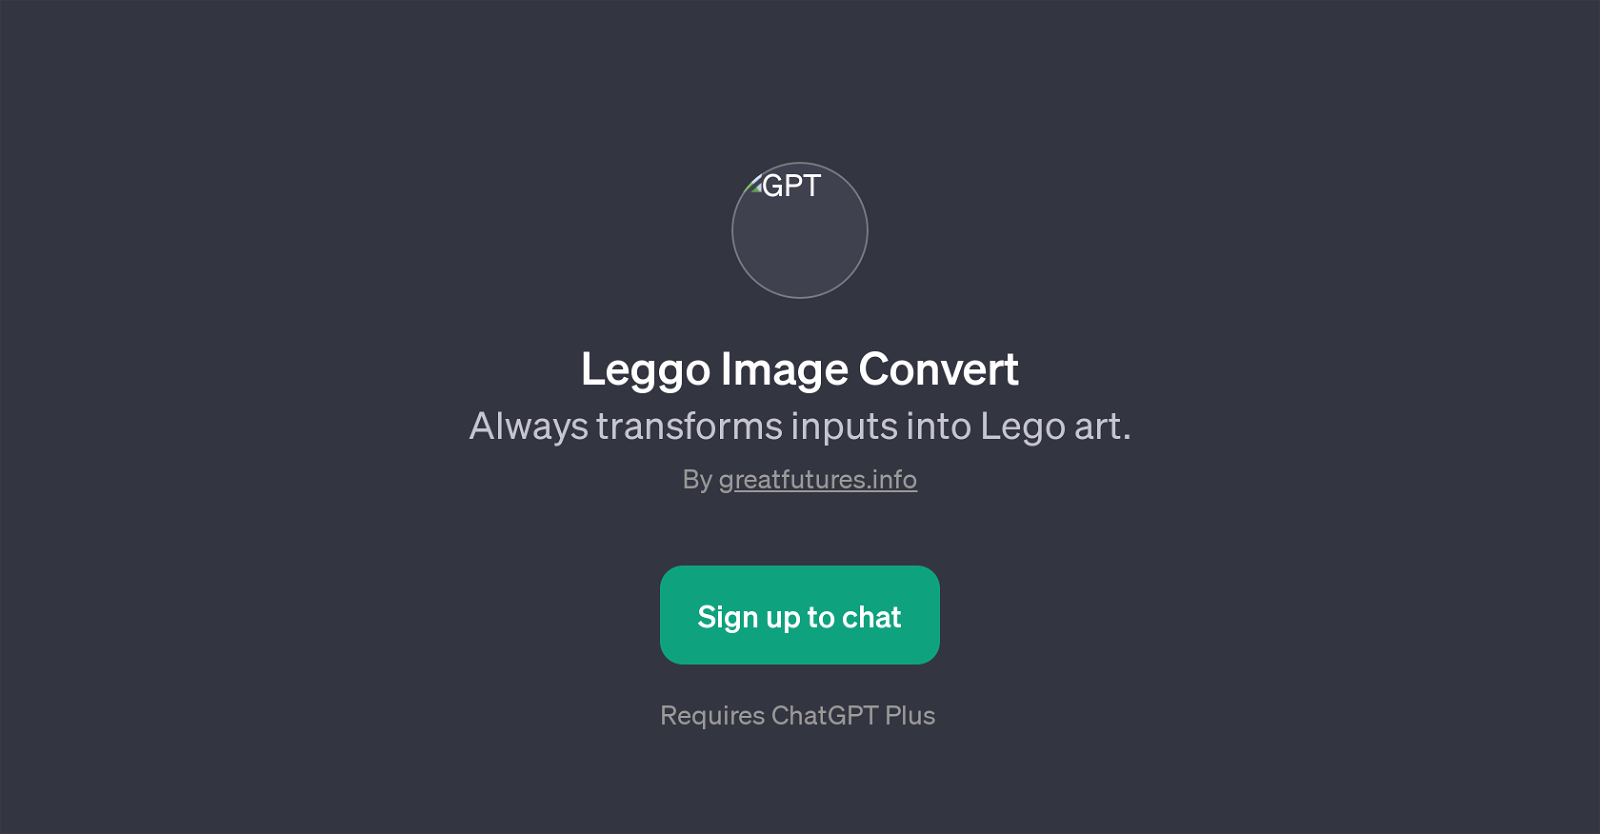 Leggo Image Convert website